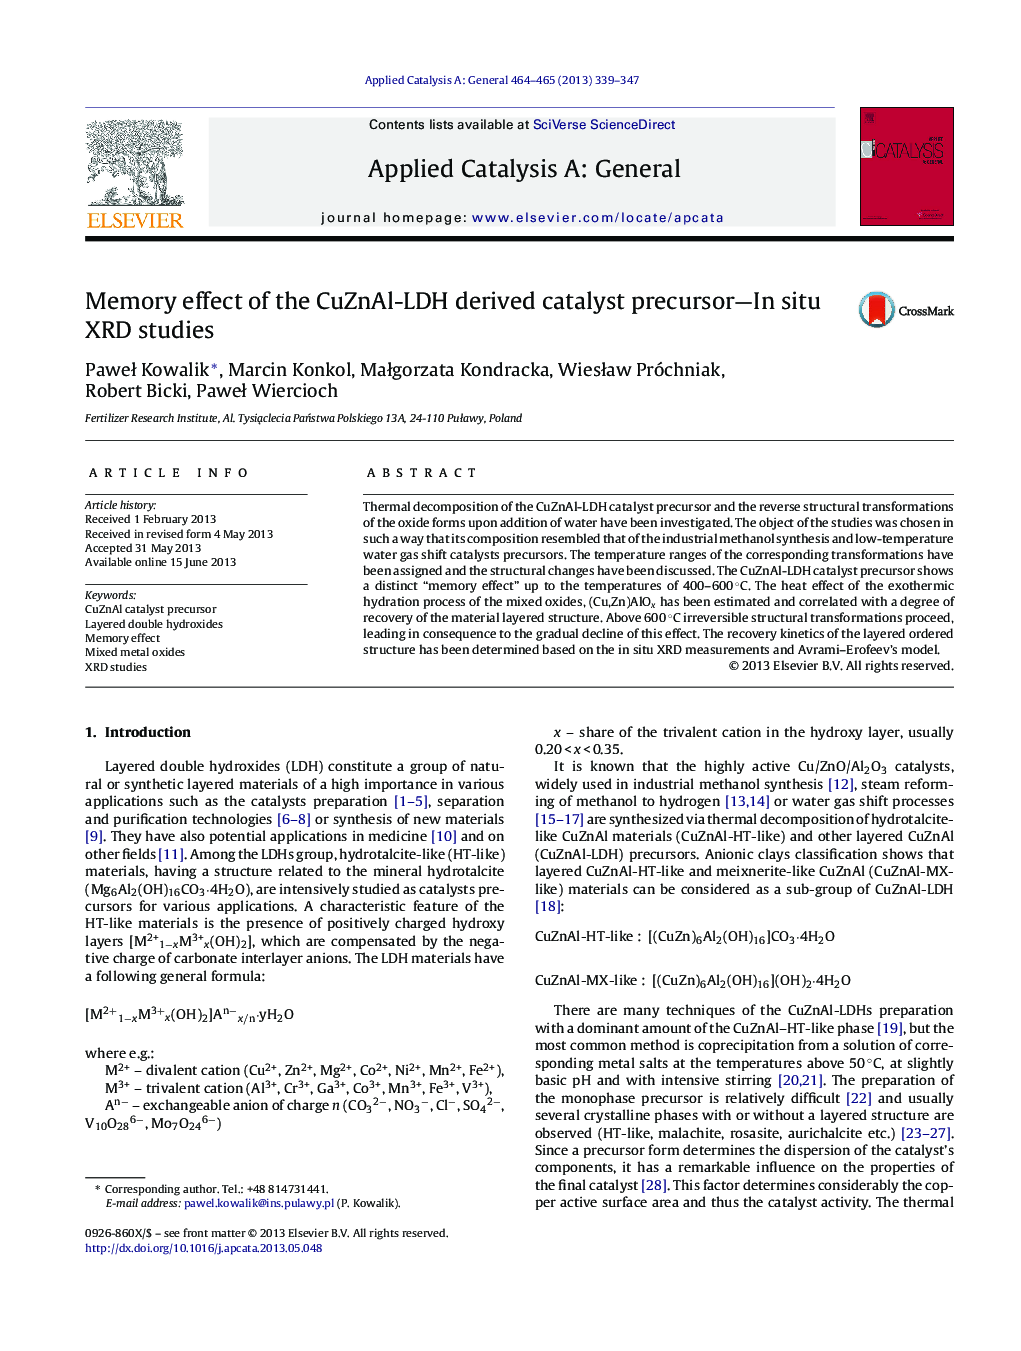 Memory effect of the CuZnAl-LDH derived catalyst precursor—In situ XRD studies